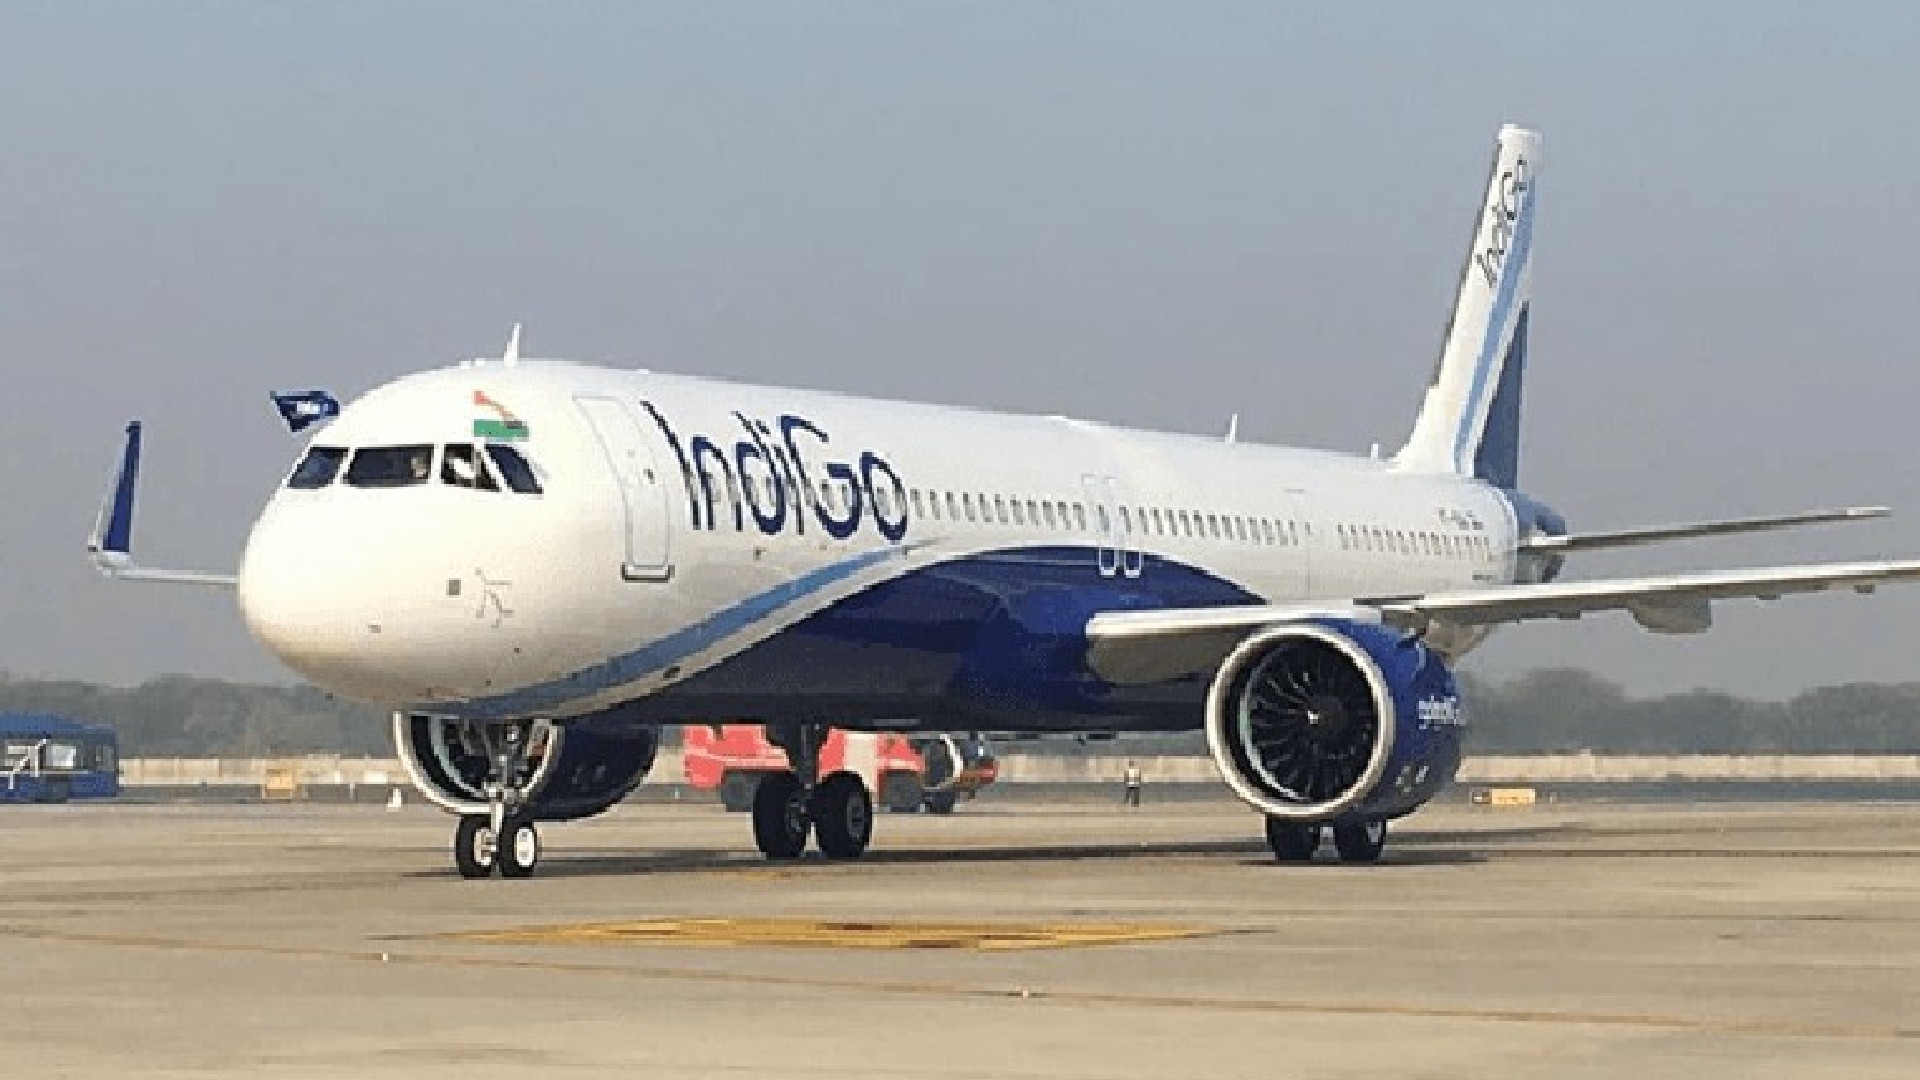 Passenger On IndiGo Delhi-Pune Flight Says He Has COVID Just Before Takeoff